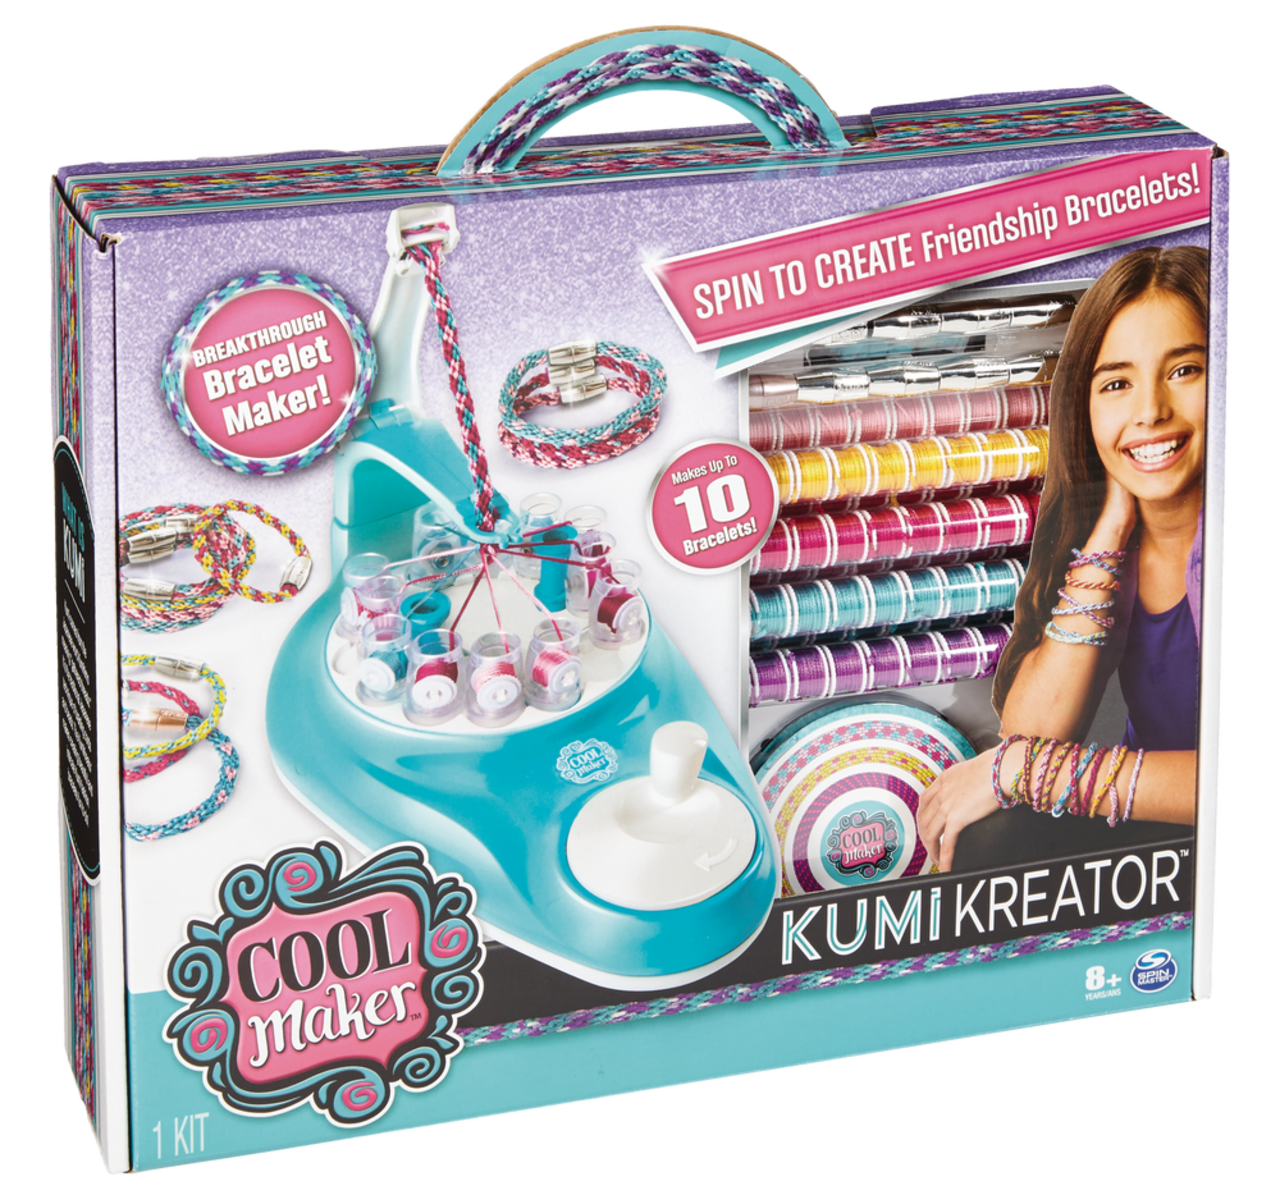 Cool Maker, KumiKreator Squad Refill Pack, Friendship Bracelet and